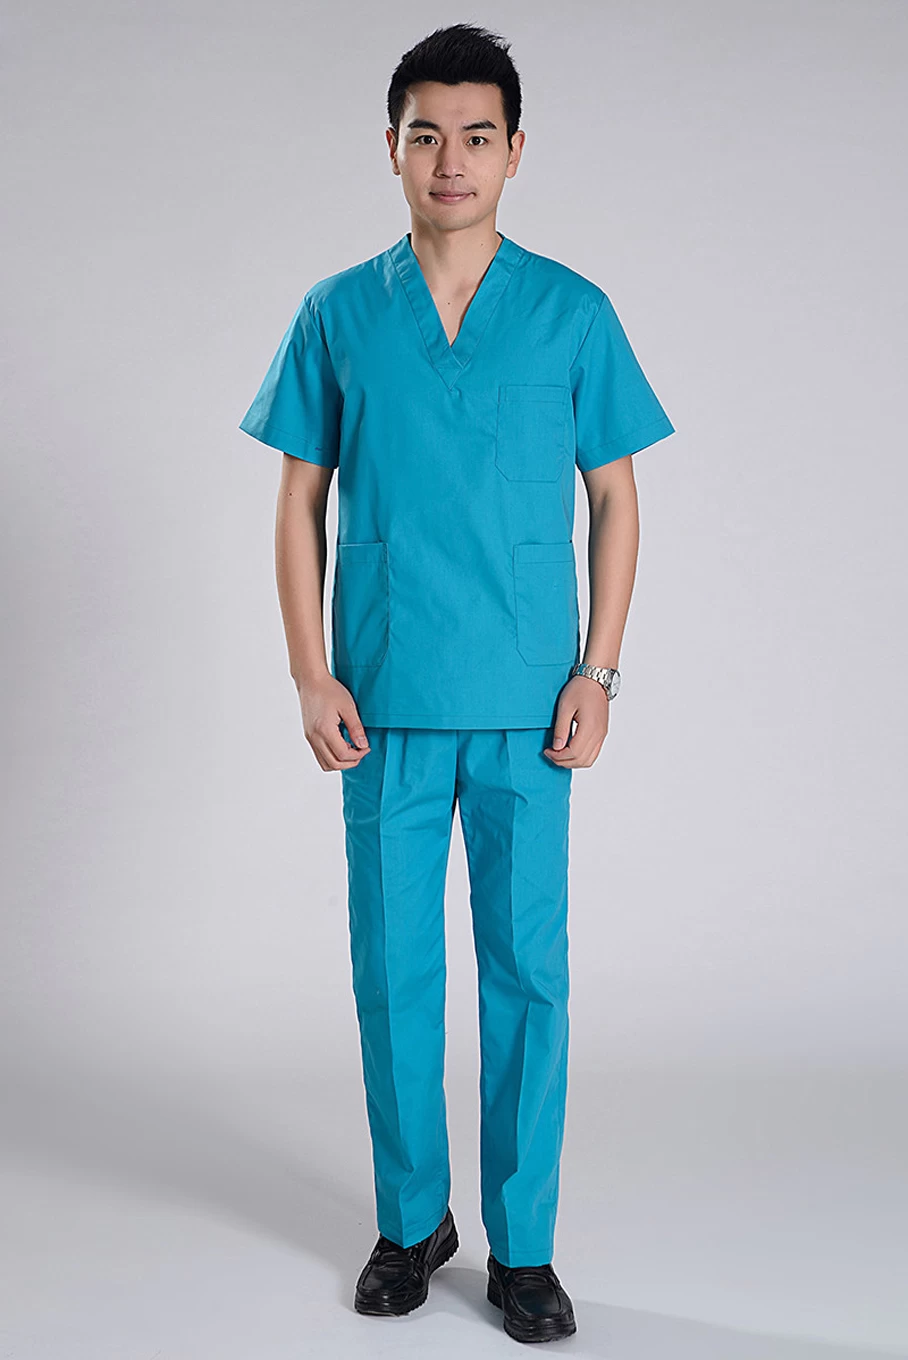 Uniform Medical Scrub Suit 